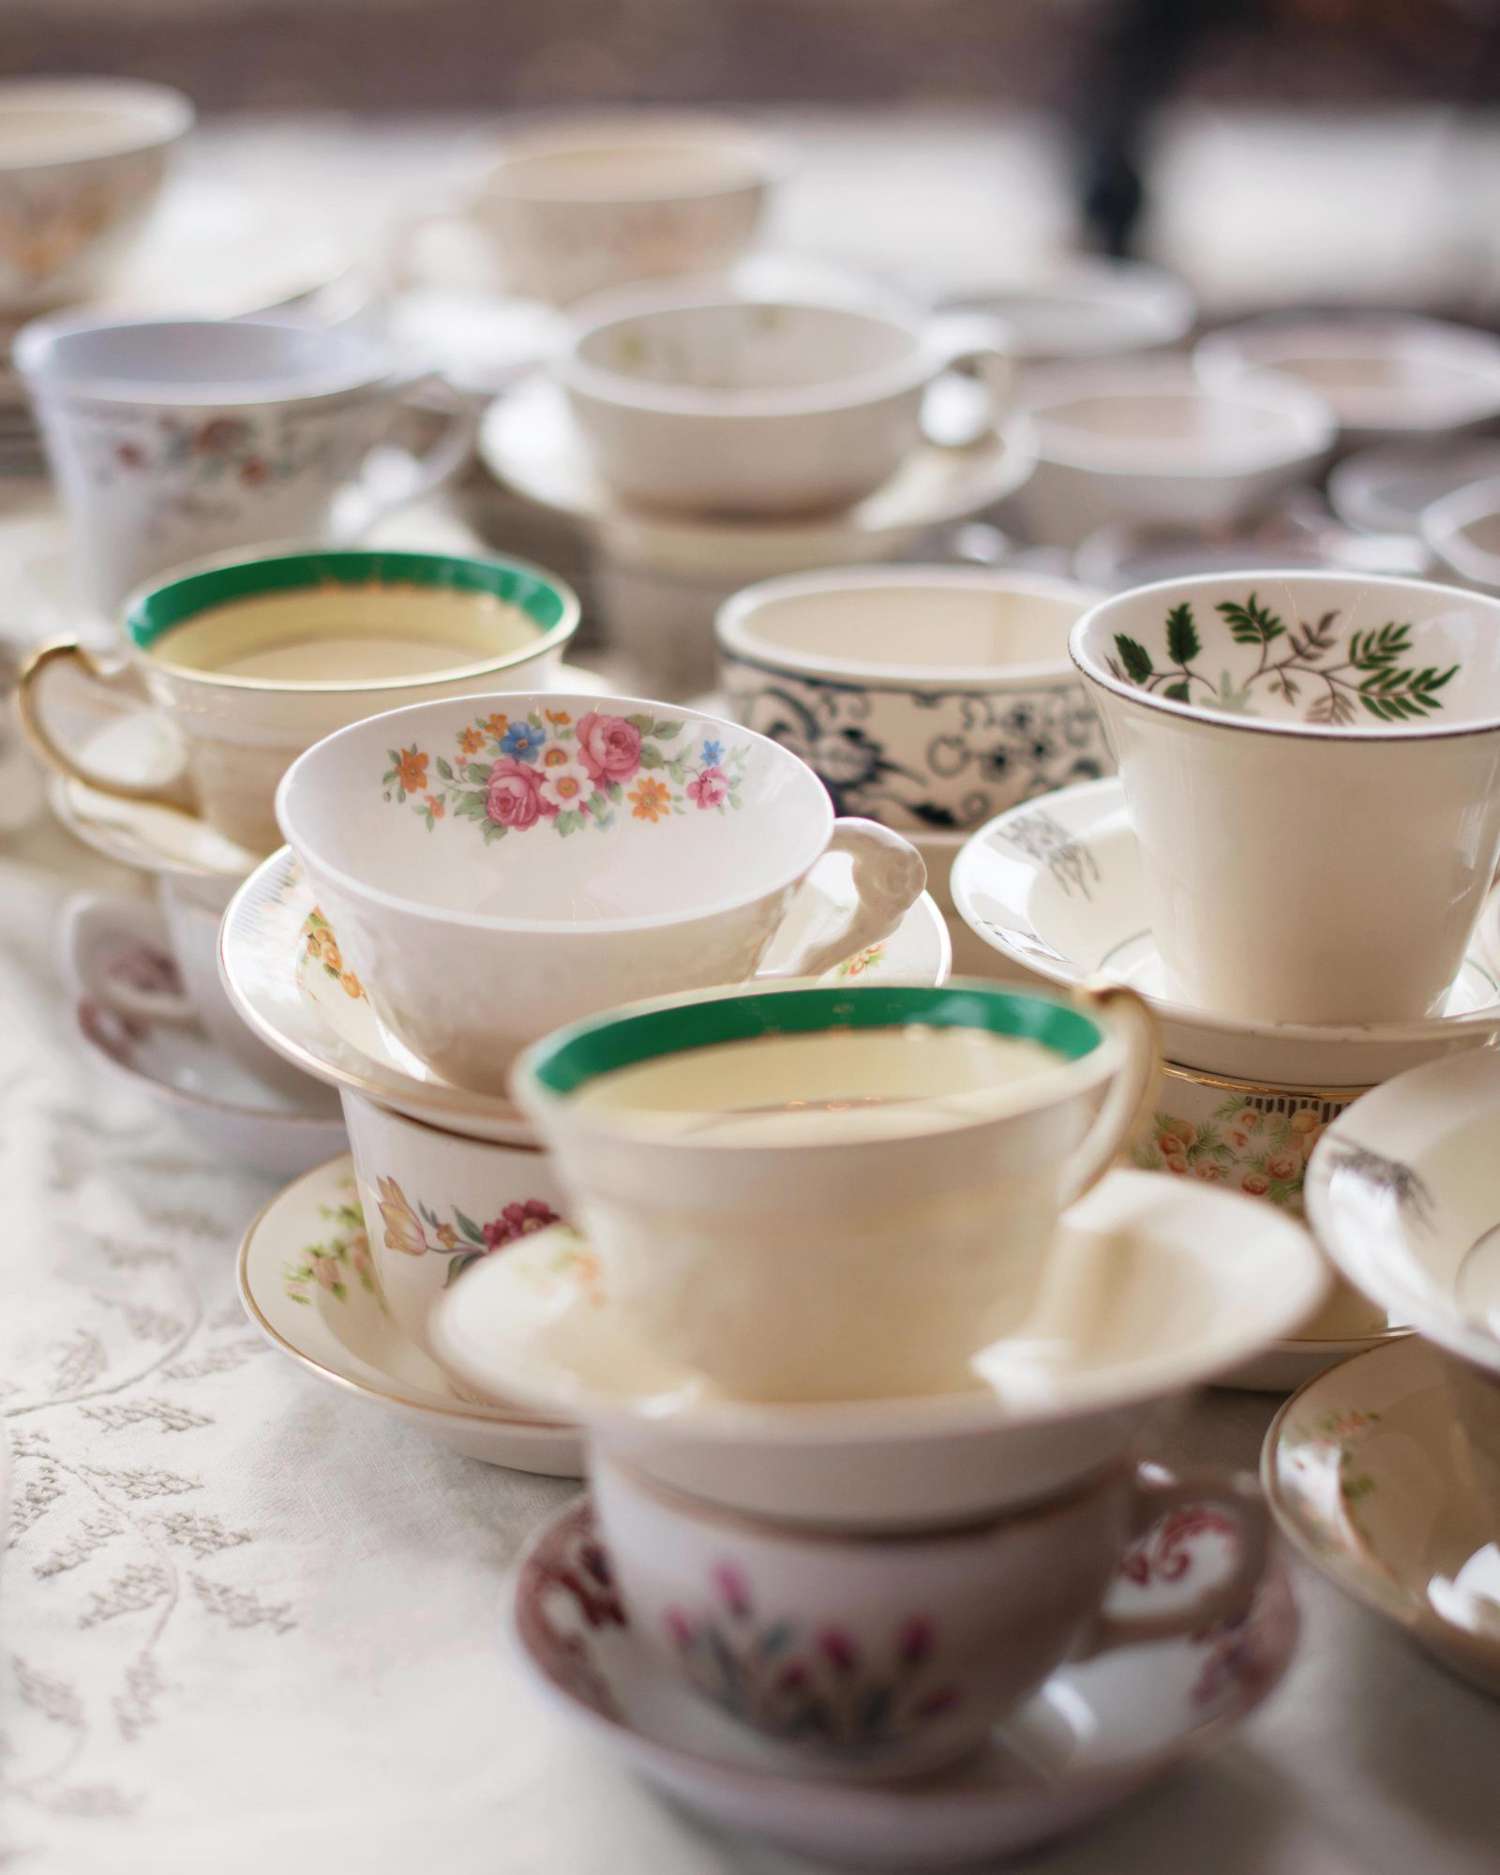 stephanie-mike-wedding-north-carolina-coffee-vintage-teacups-saucers-324-s112980.jpg